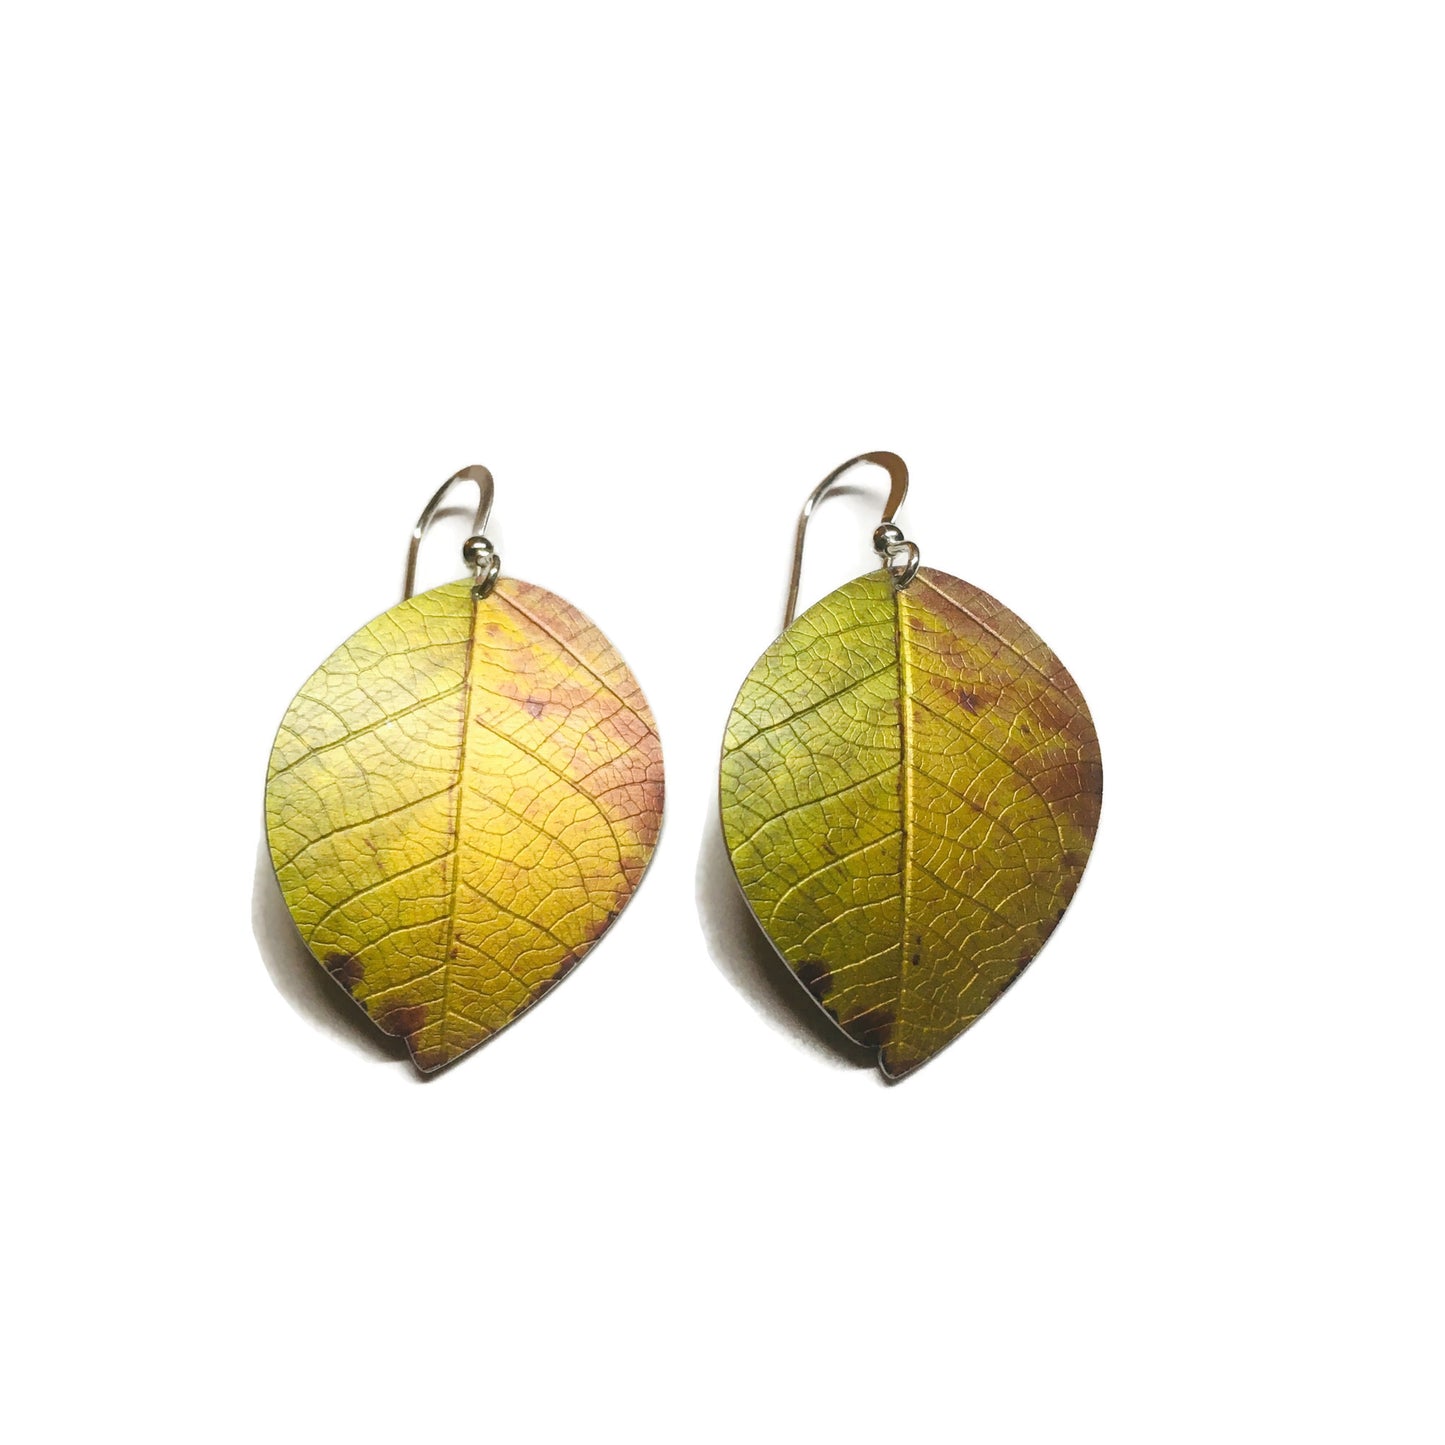 Beech leaf earrings by Photofinish Jewellery